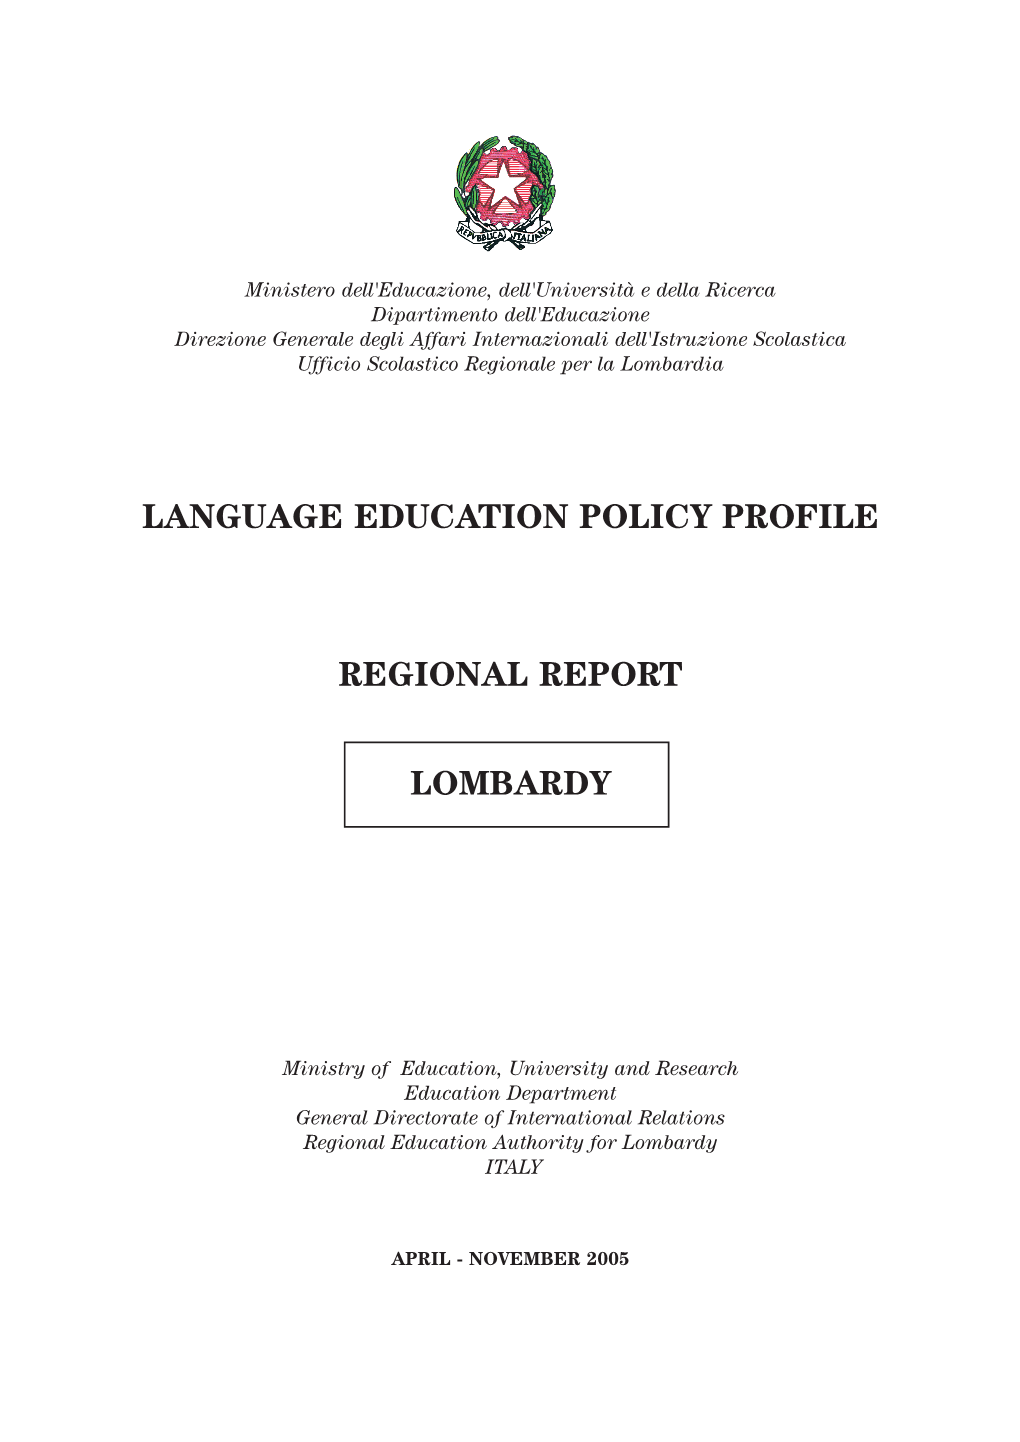 Language Education Policy Profile Regional Report